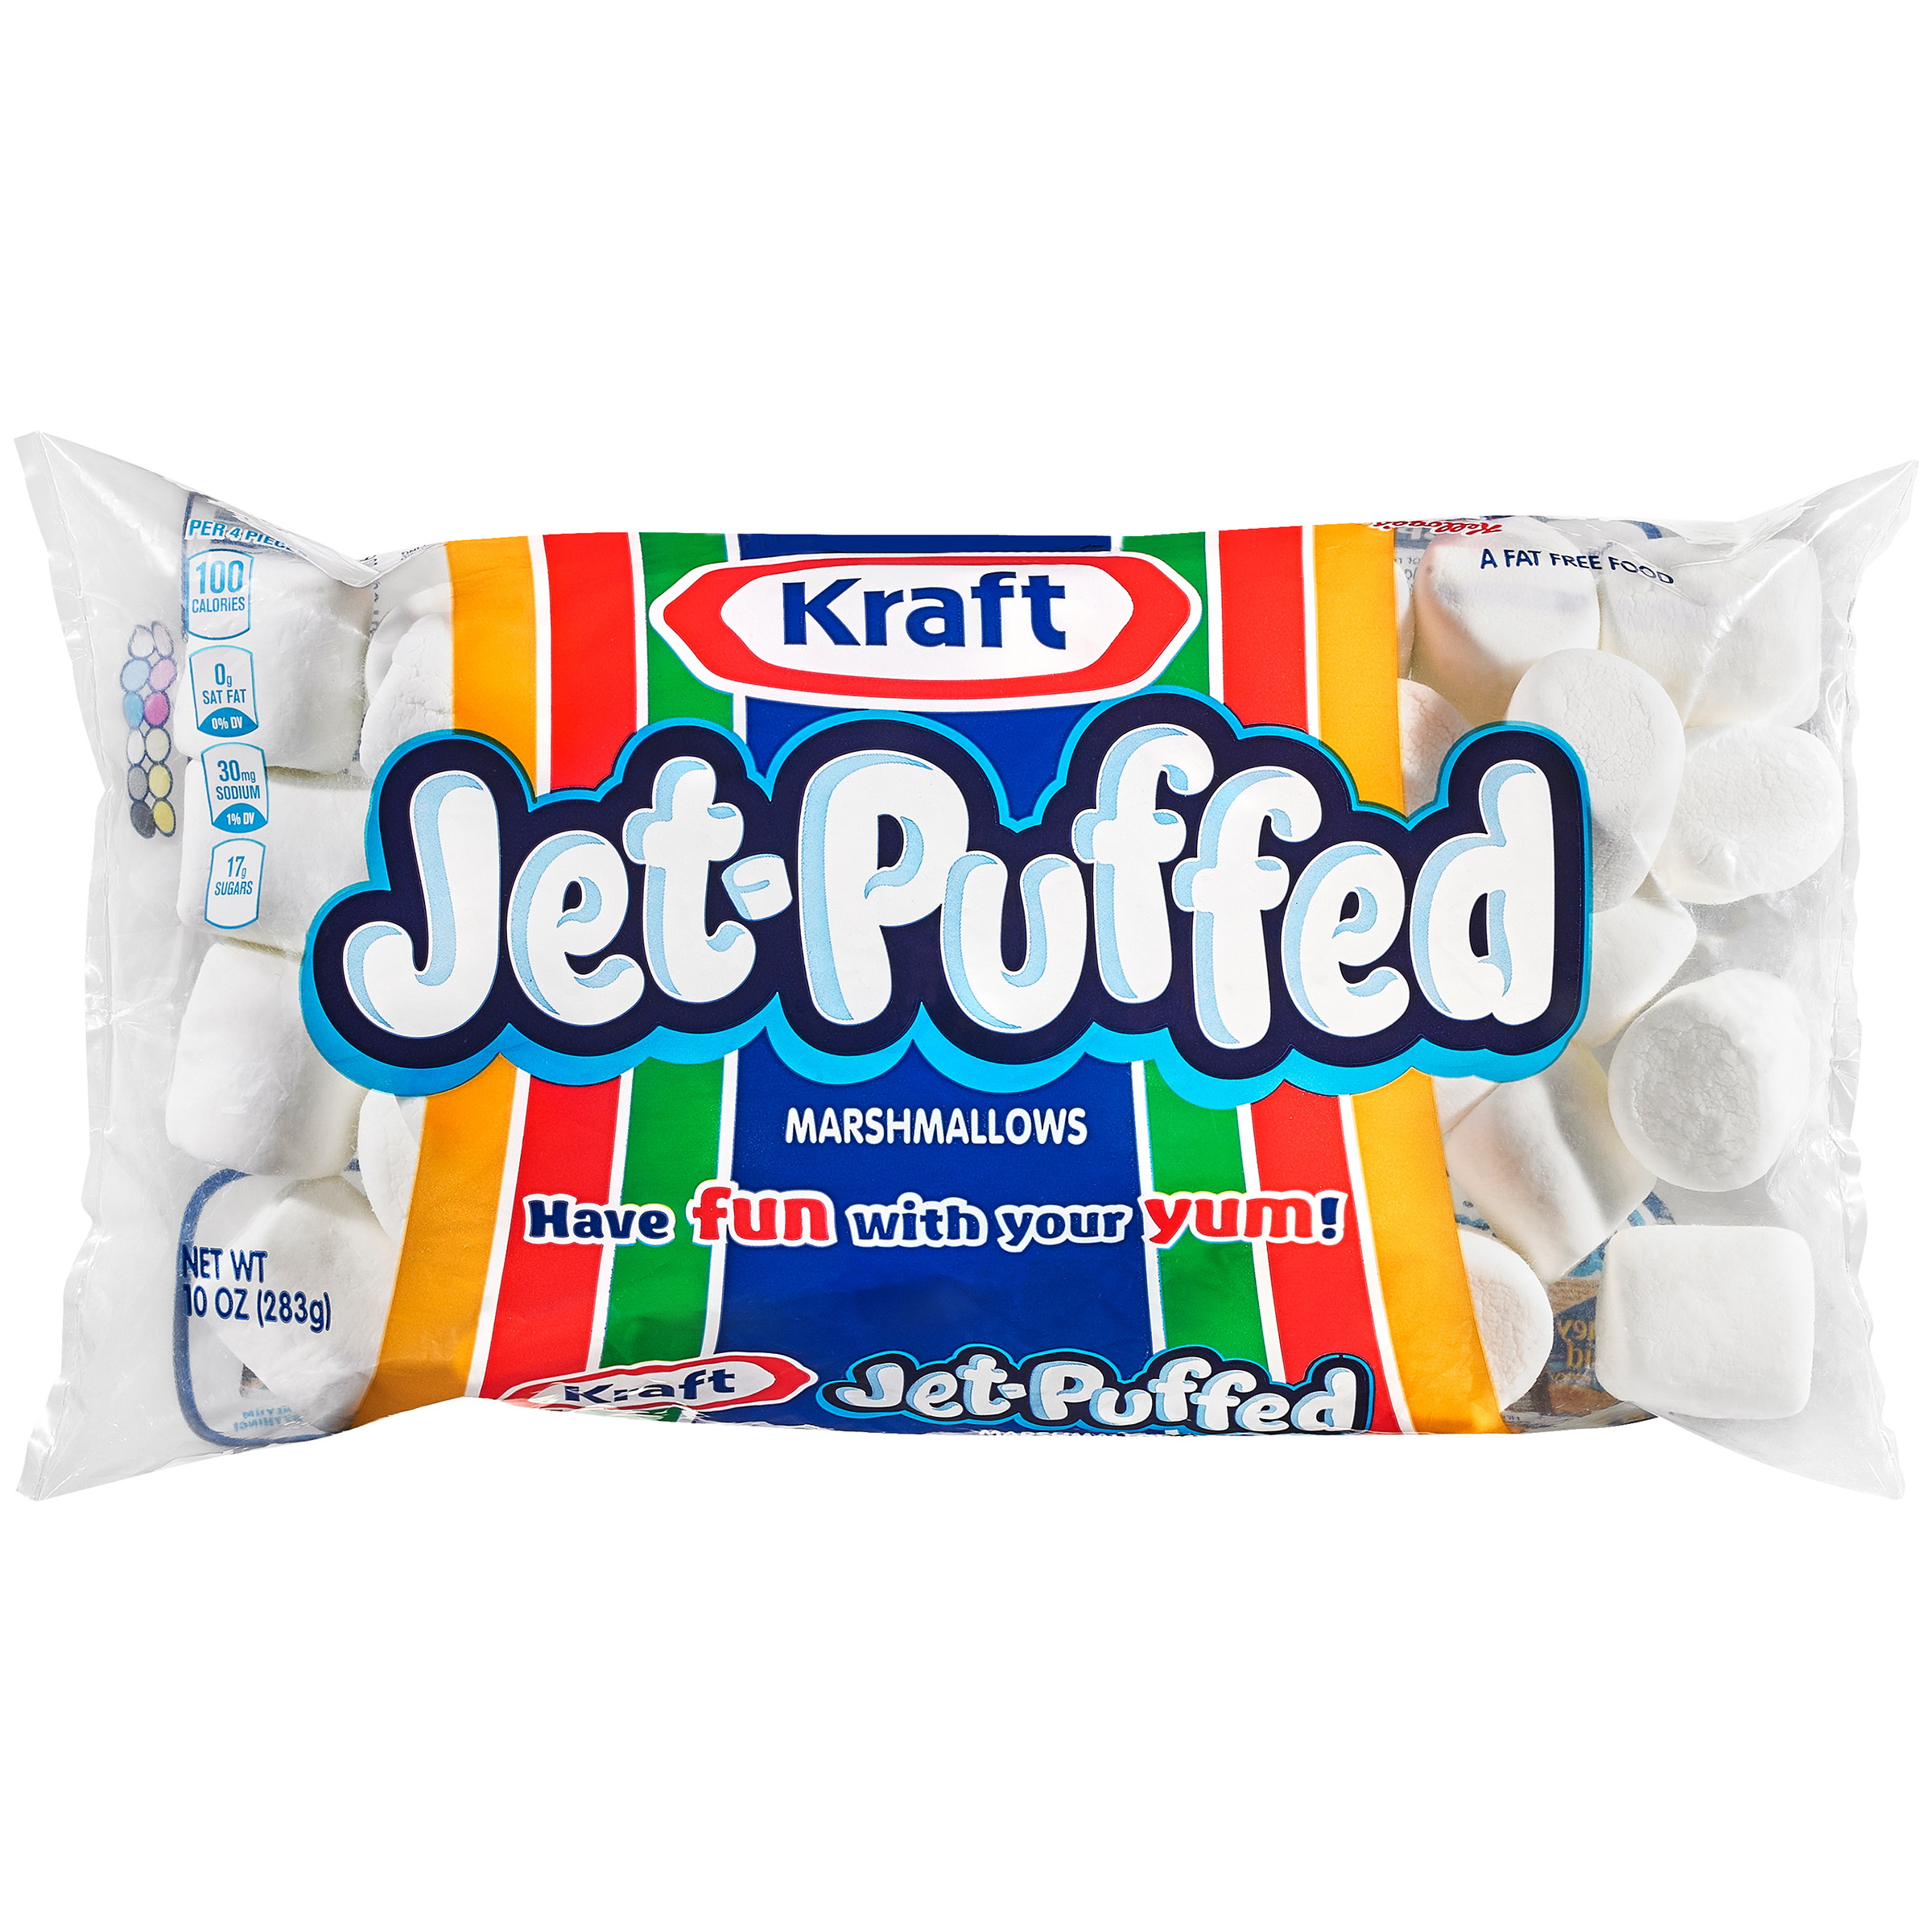 Kraft Jet-Puffed Marshmallows Food Product Image